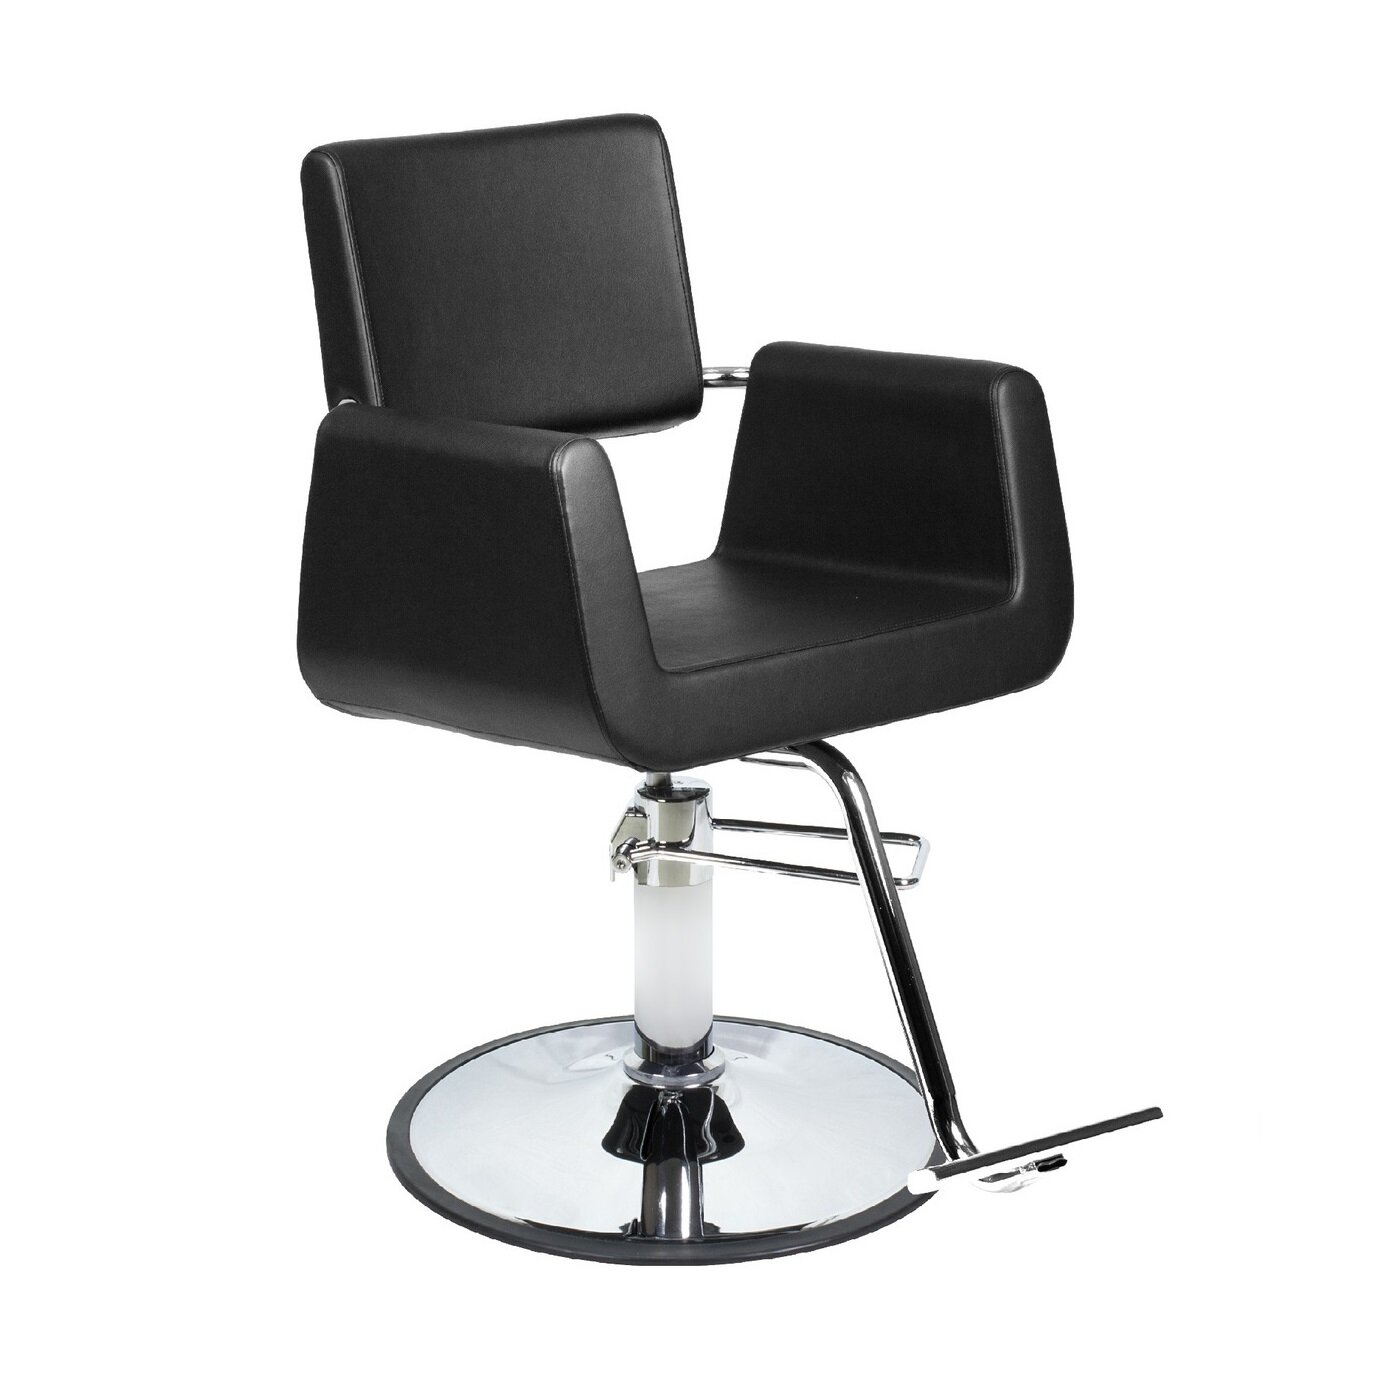 Brayden Studio Bellrive Faux Leather Massage Chair